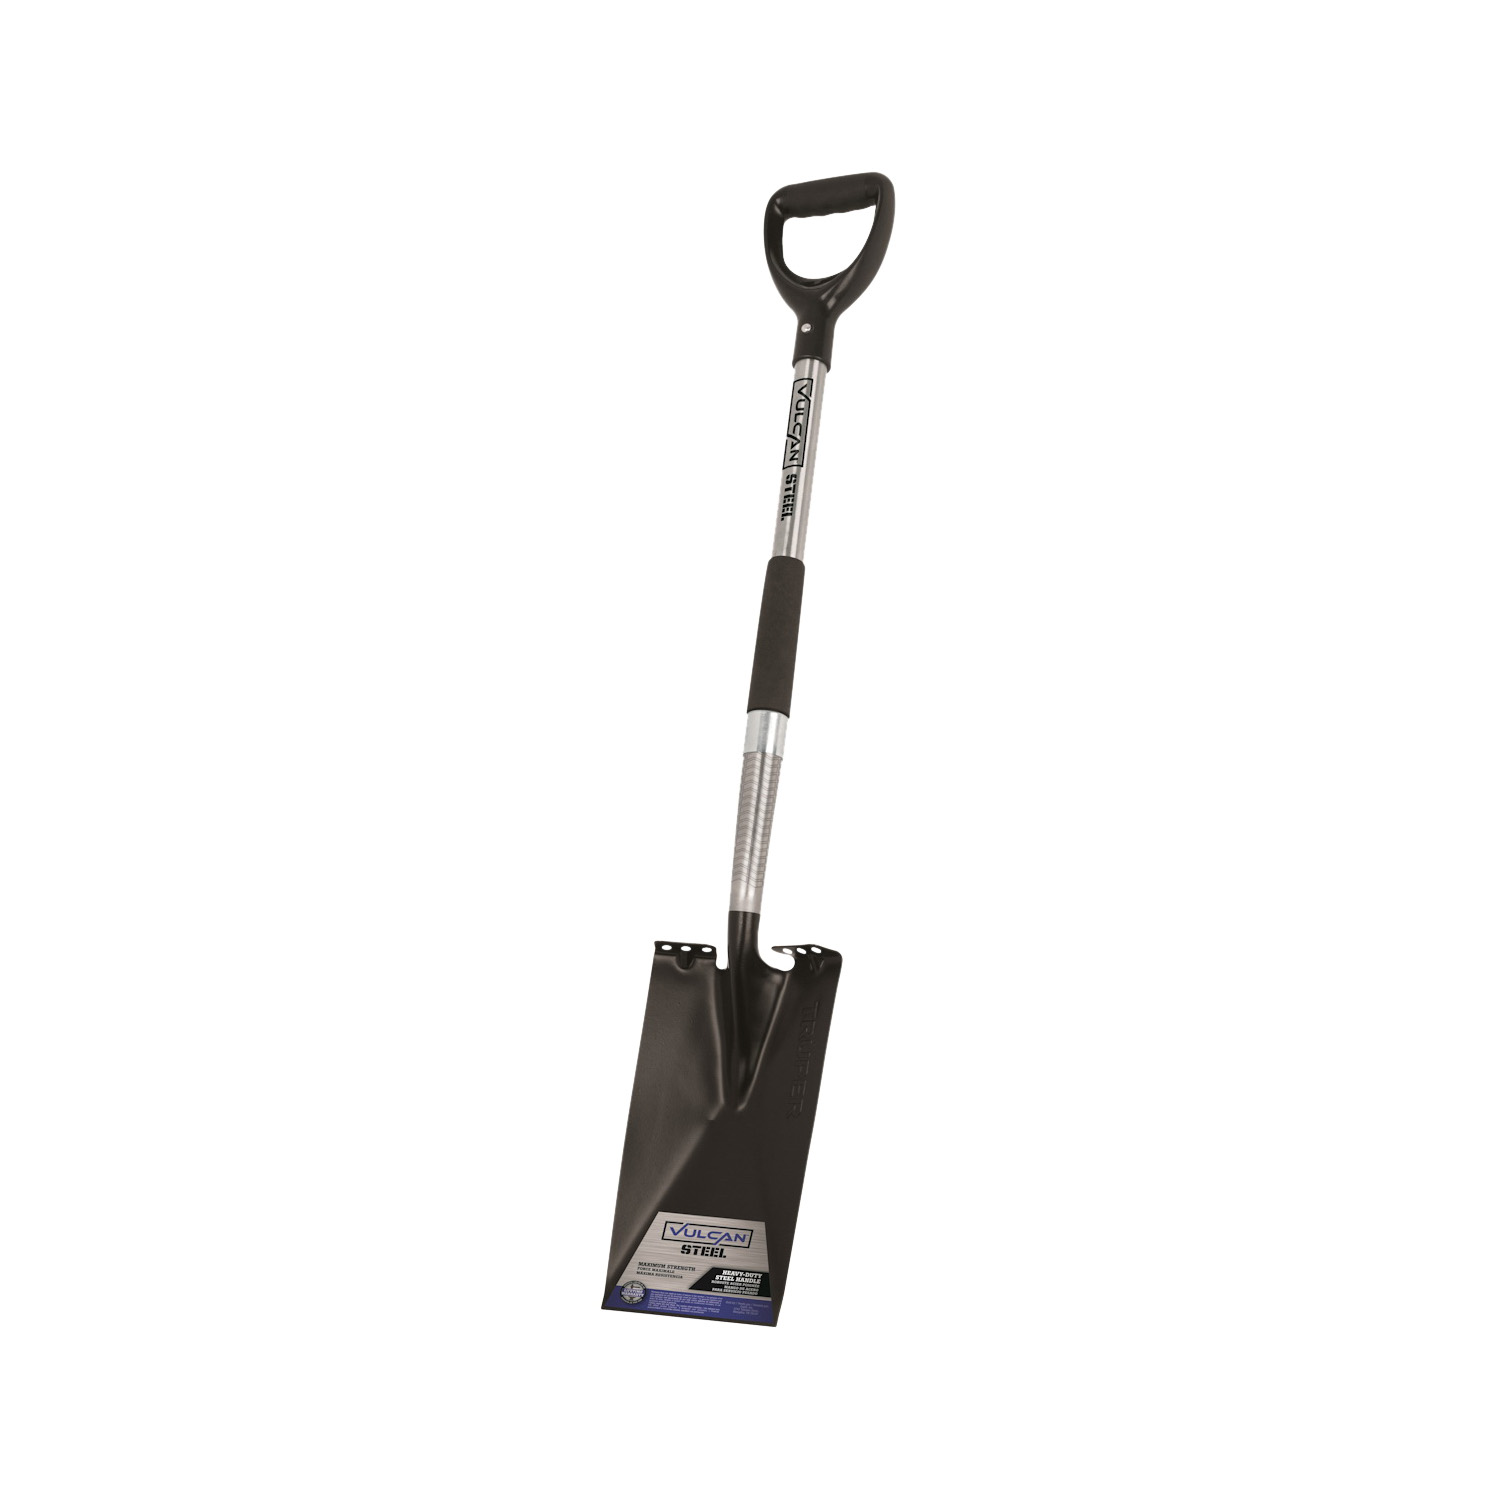 34862 Garden Shovel, Stainless Steel Blade, Steel Handle, D-Shaped Handle, 30 in L Handle